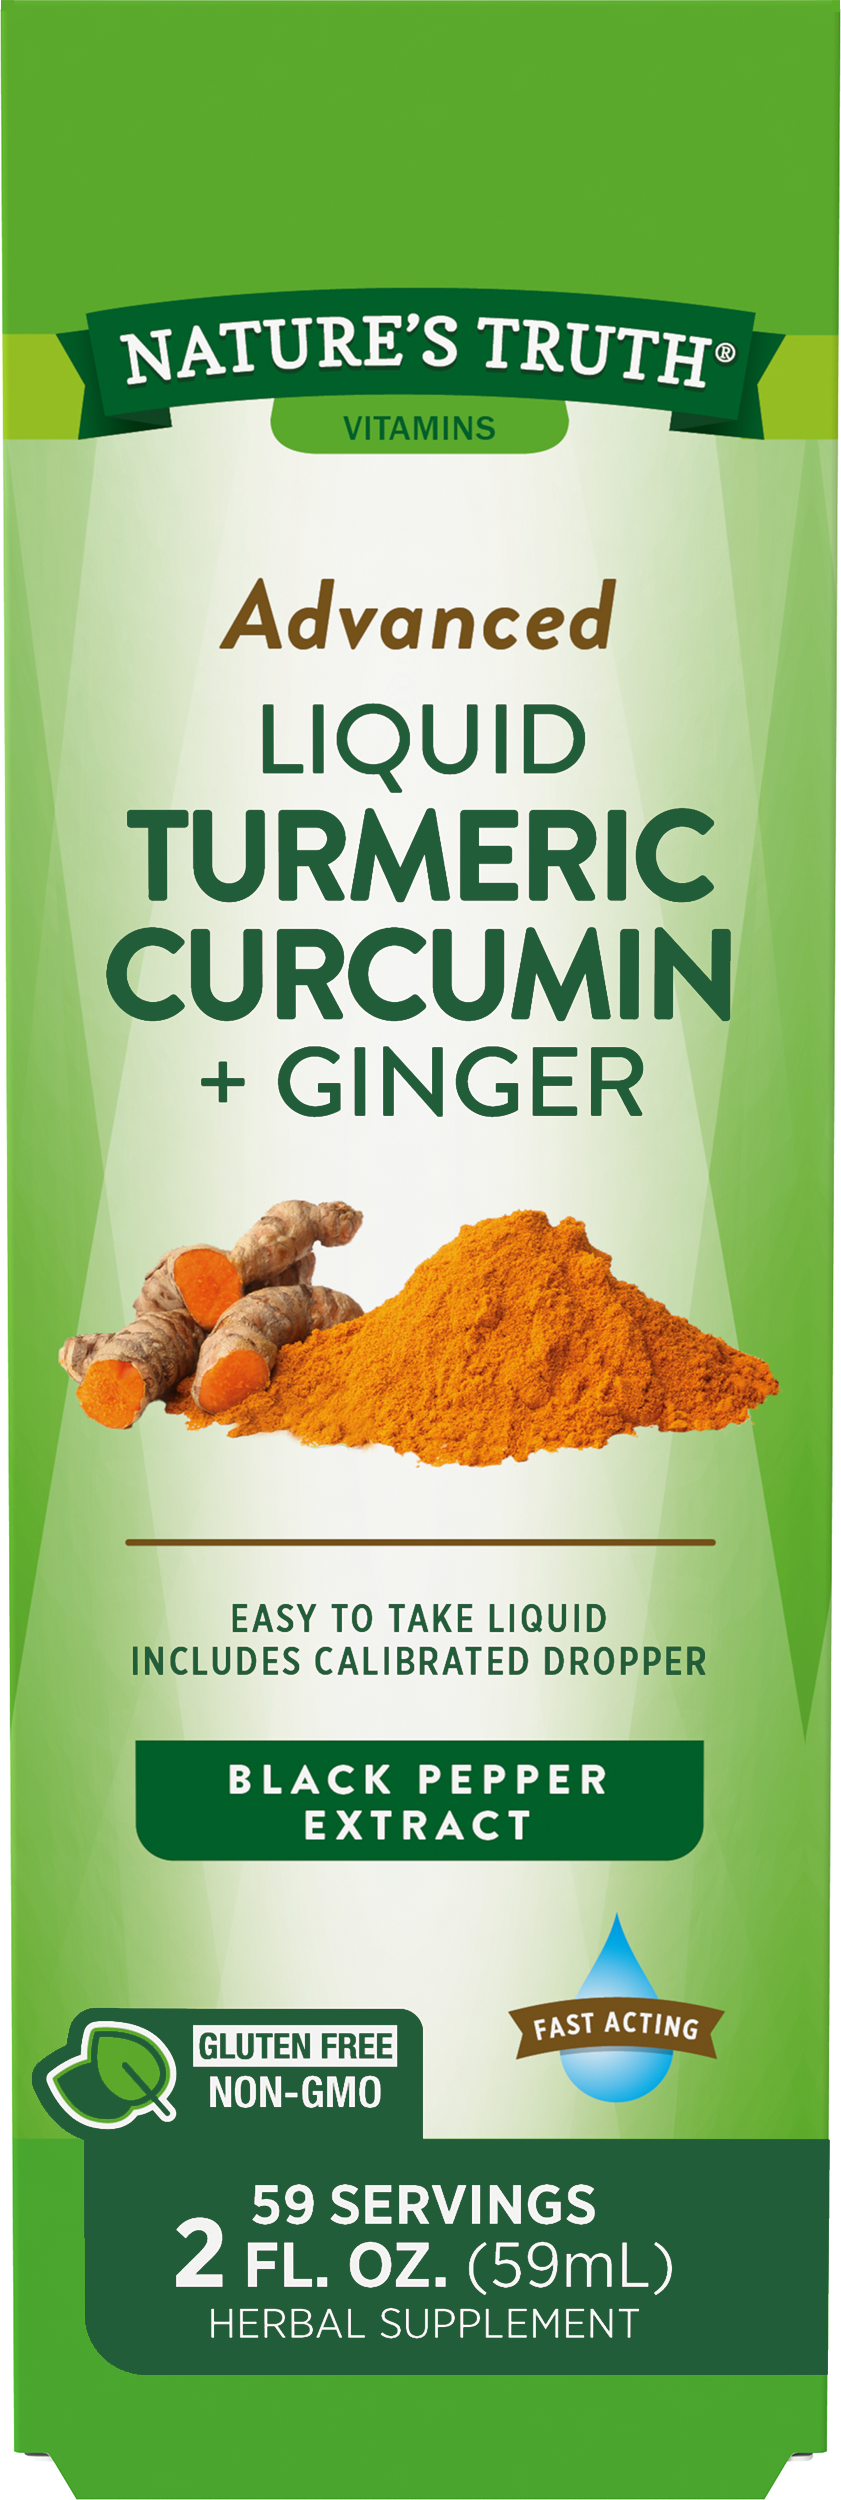 Turmeric Curcumin Liquid with Black Pepper Extract, Ginger